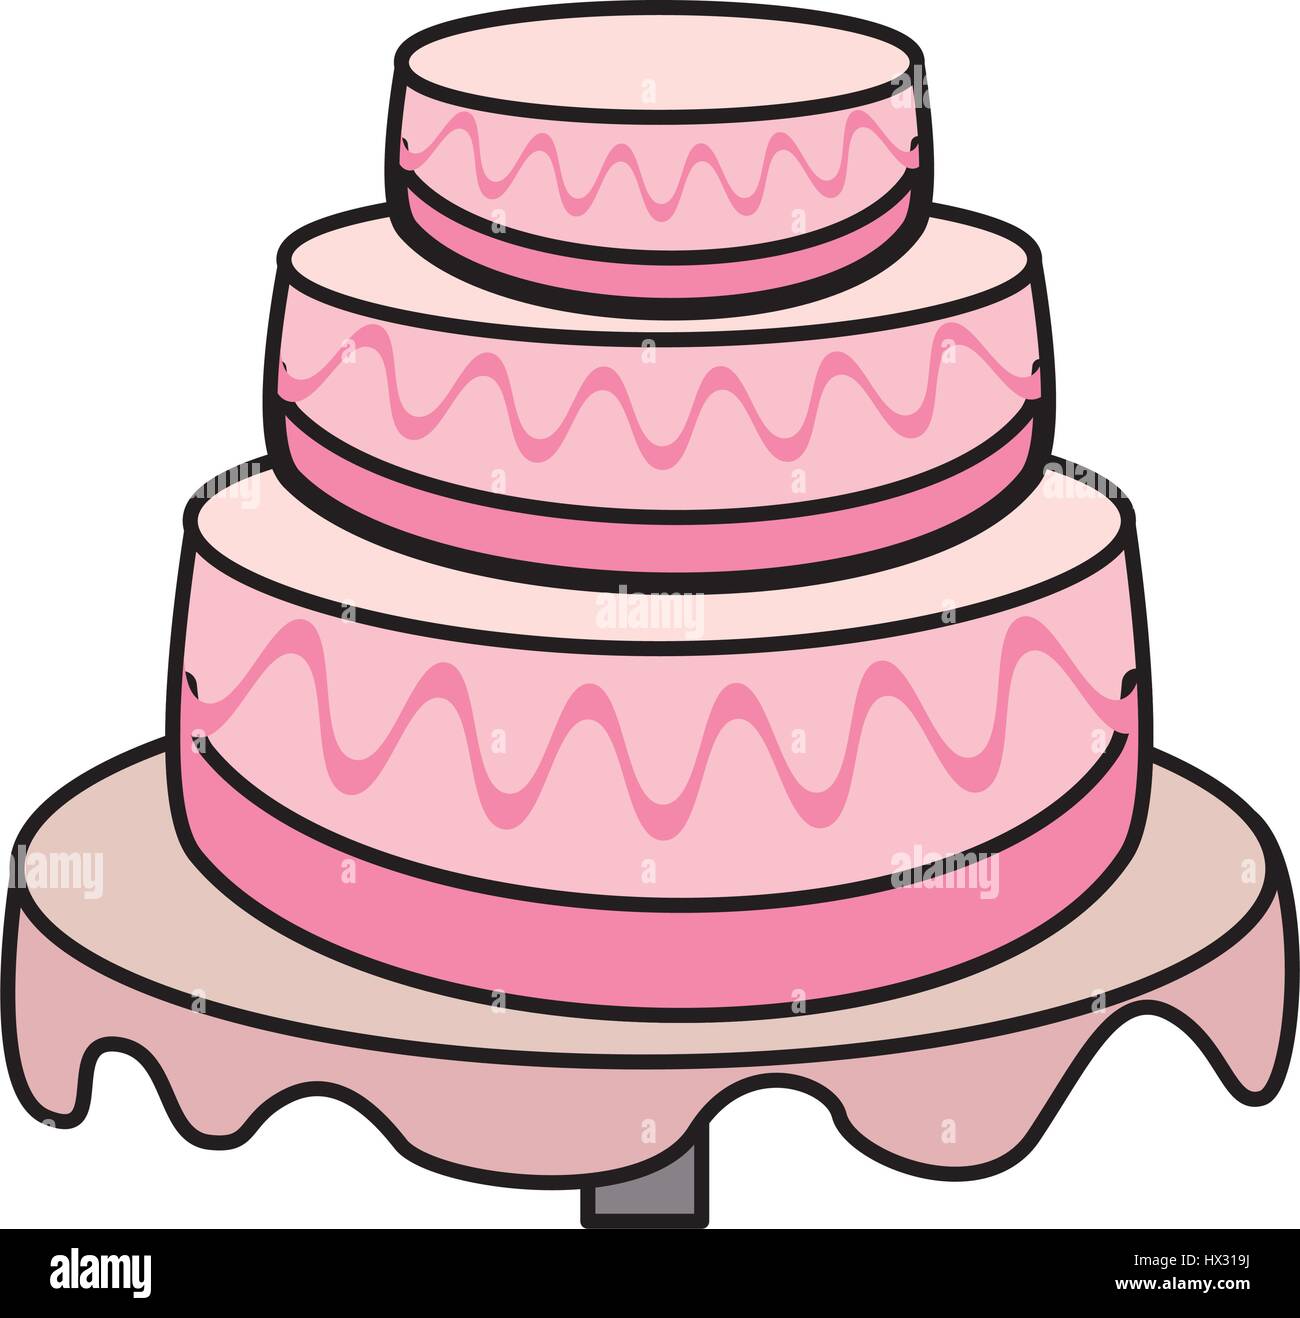 cake wedding dessert image Stock Vector